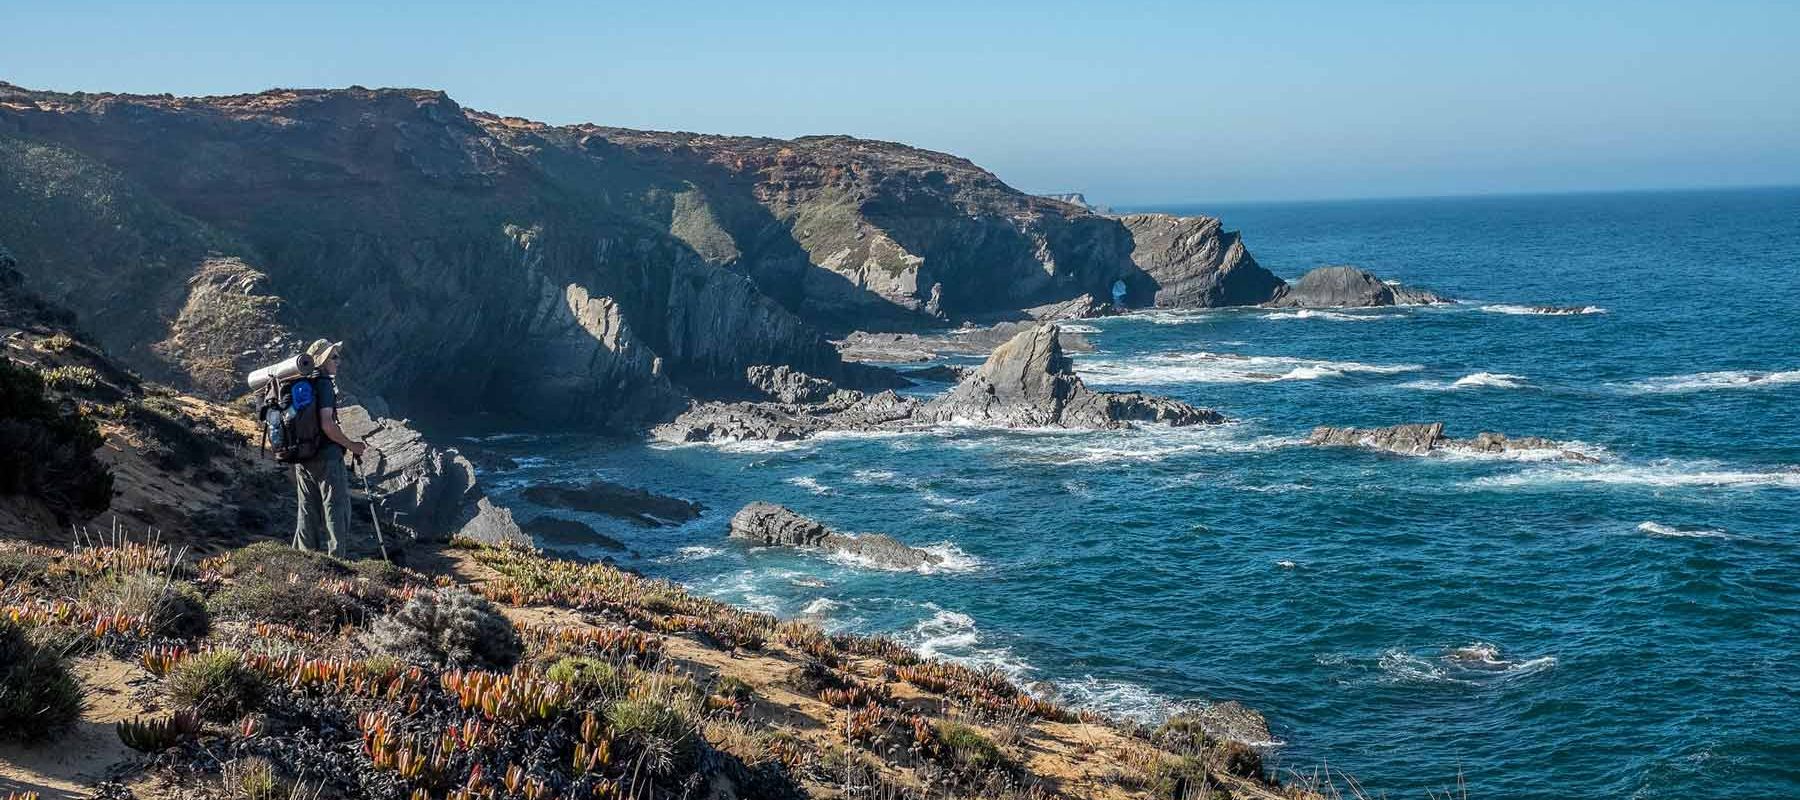 Portugal Coastal View of Sea and Hiking Trail